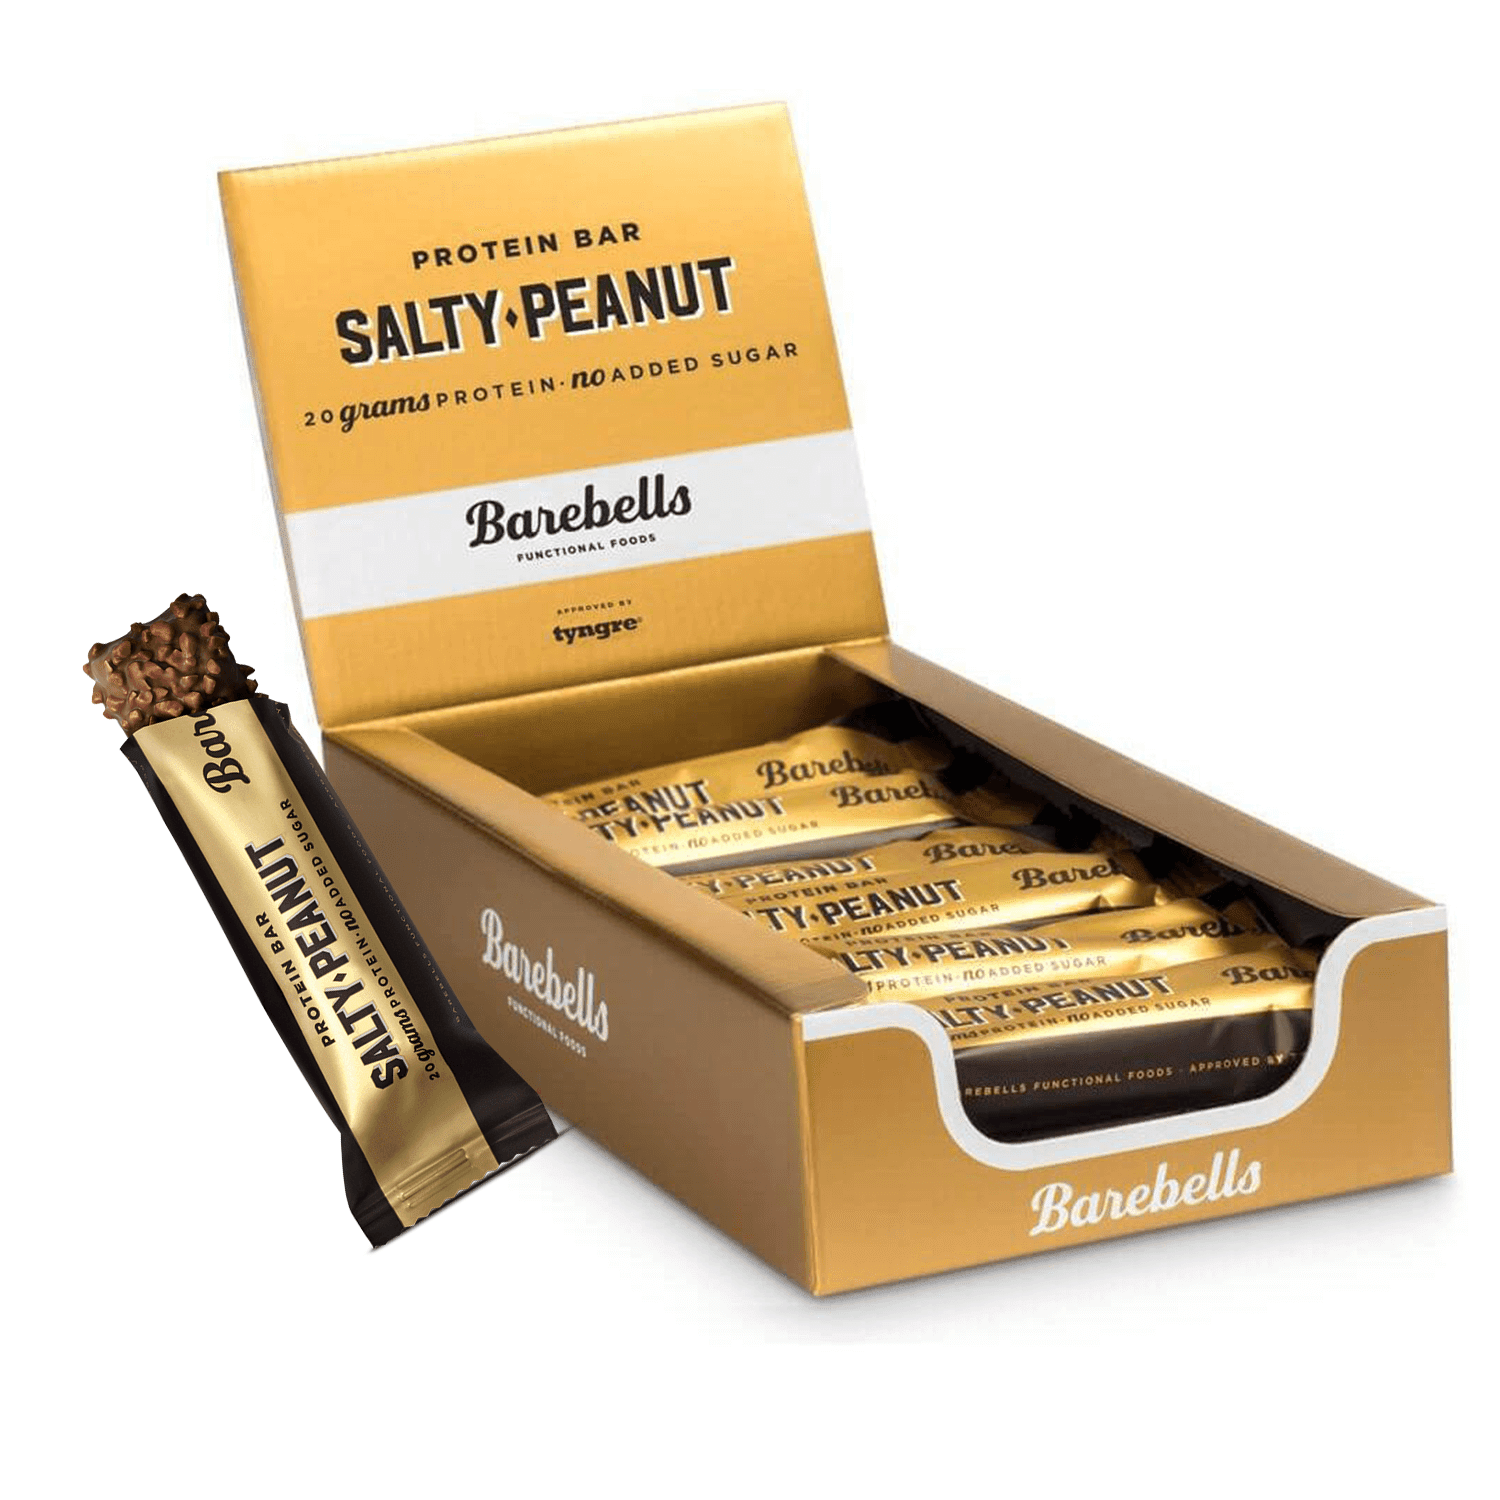 Salty Peanut  Buy Barebells Protein Bars Online